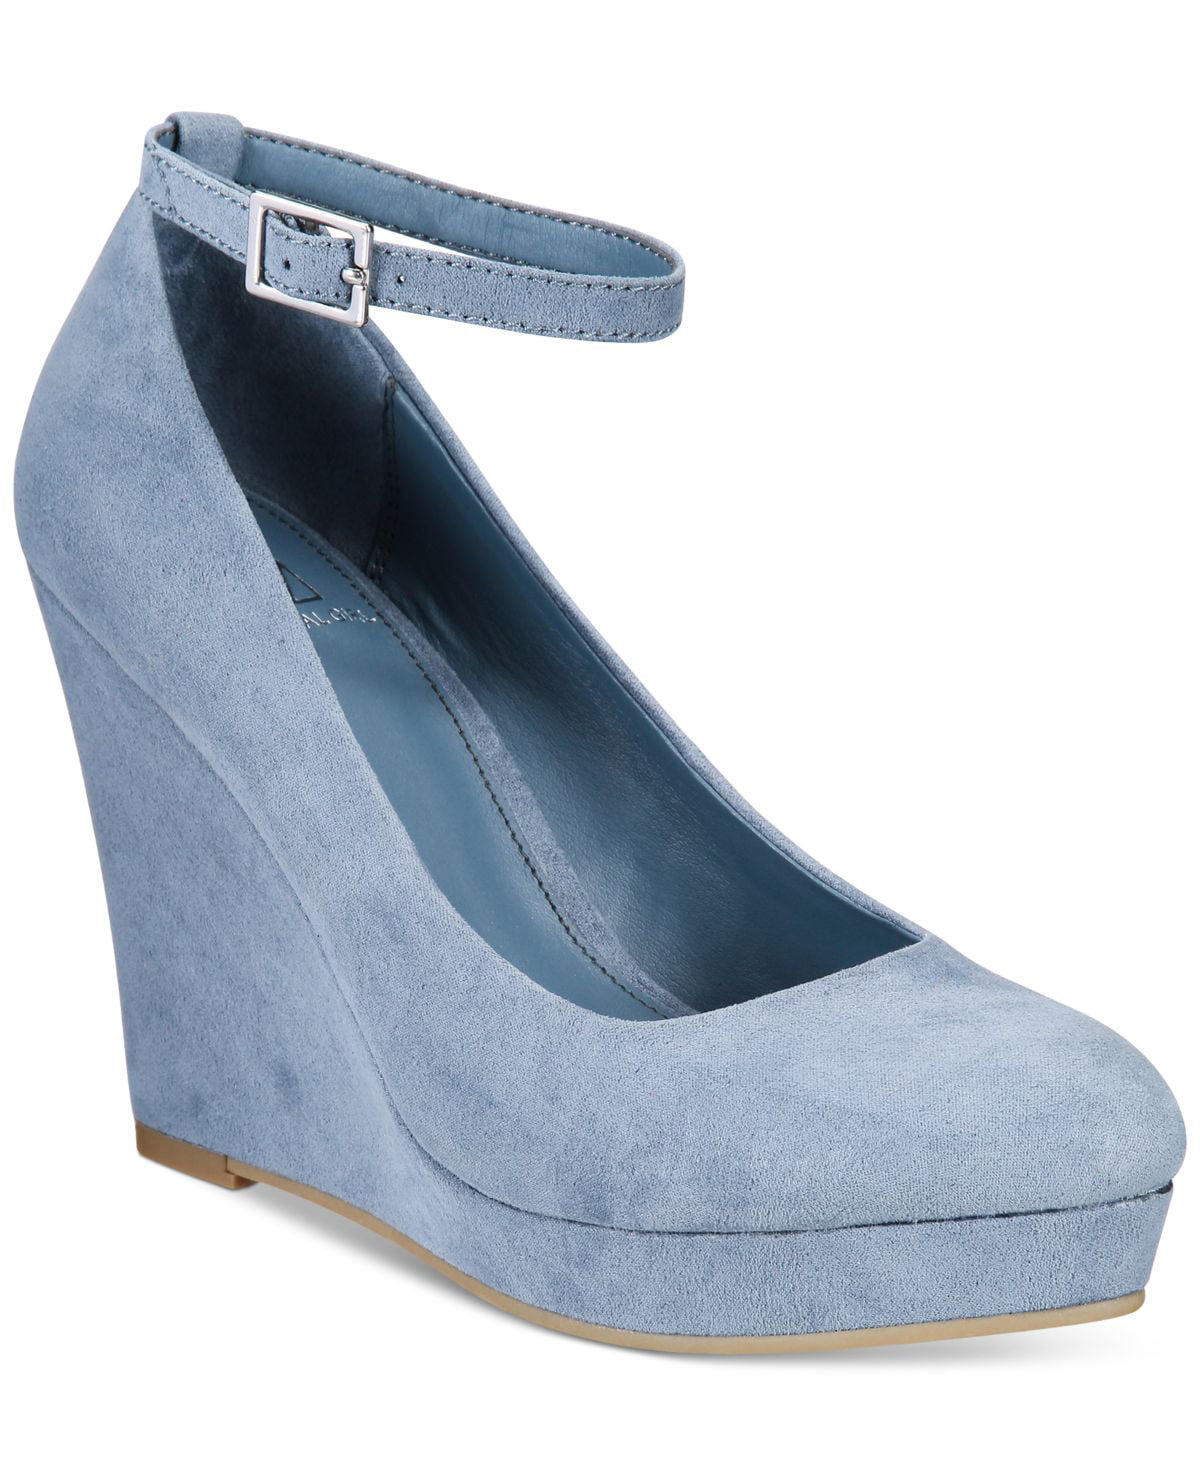 powder blue womens shoes